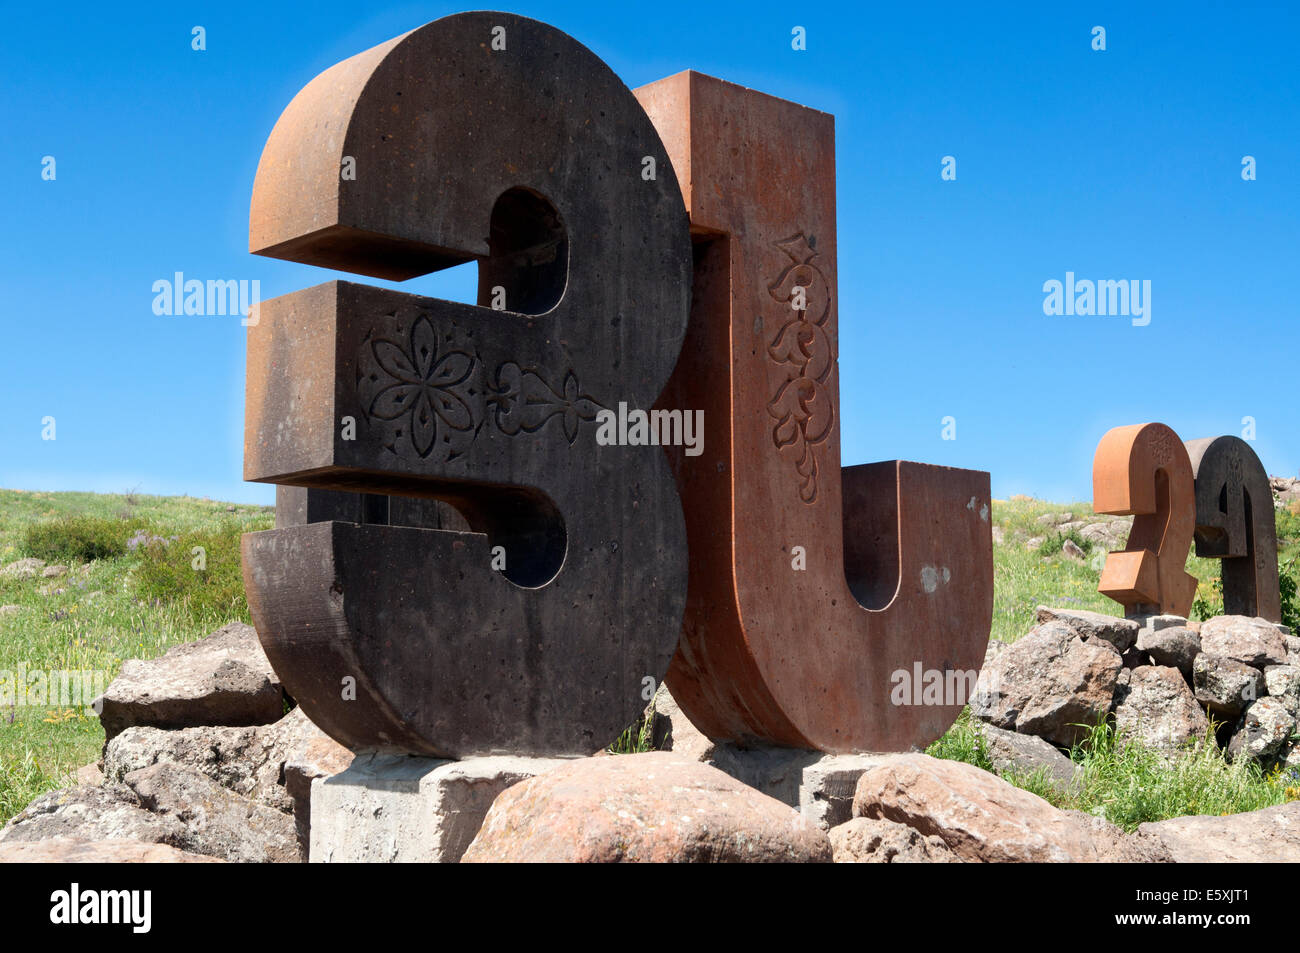 1,047 Alfabeto Armenio Images, Stock Photos, 3D objects, & Vectors